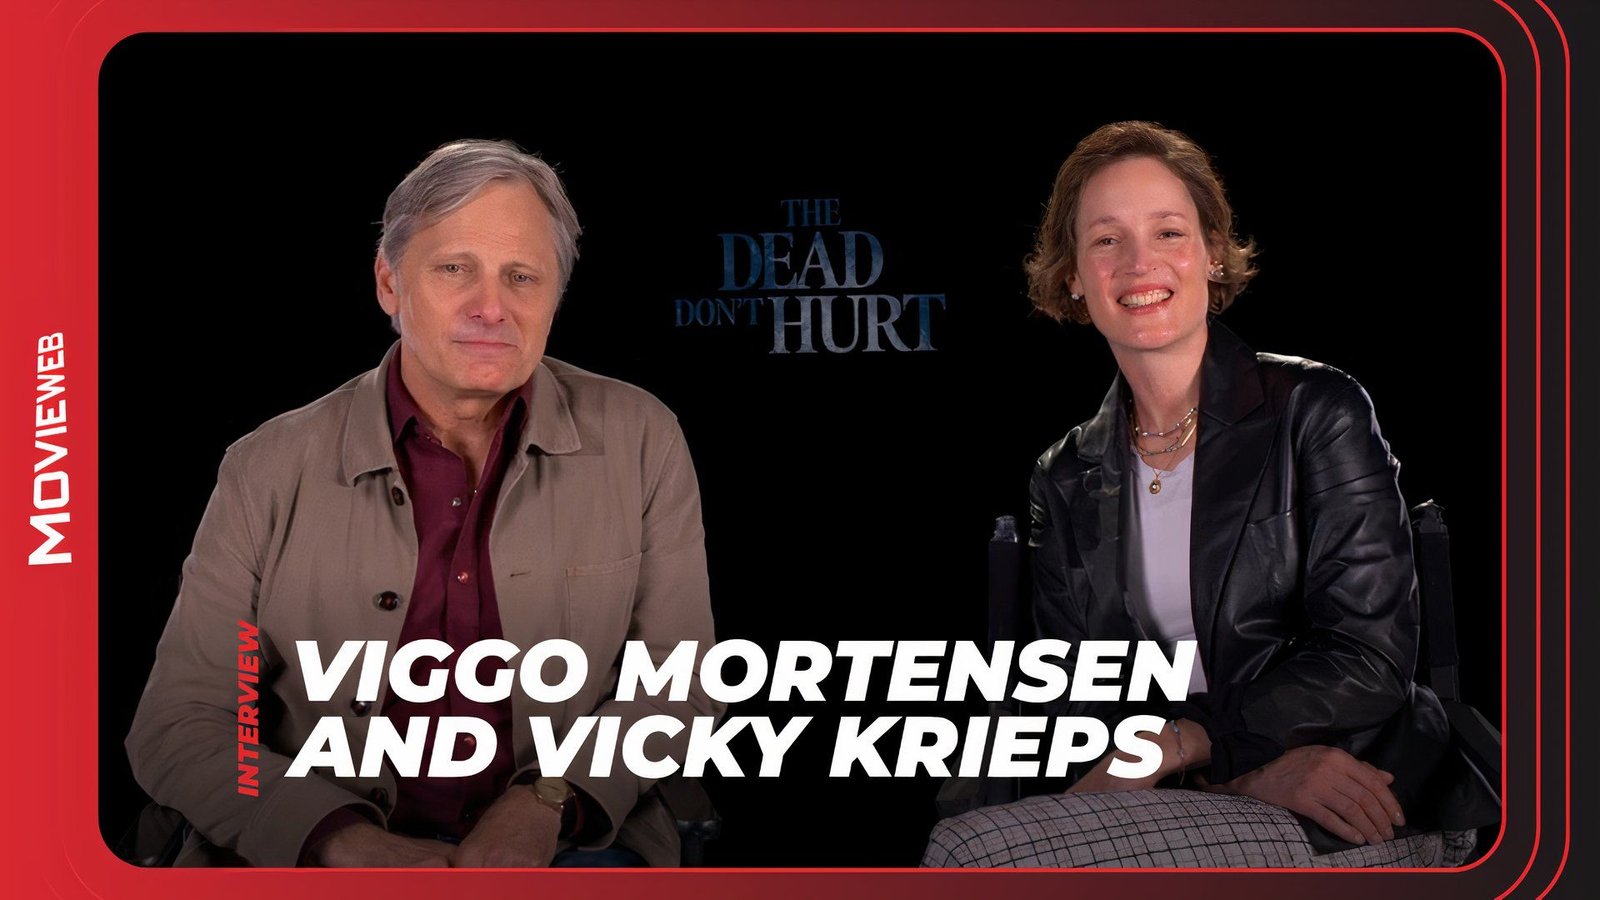 Viggo Mortensen & Vicky Krieps on Their Realistic Romance in The Dead Don't Hurt